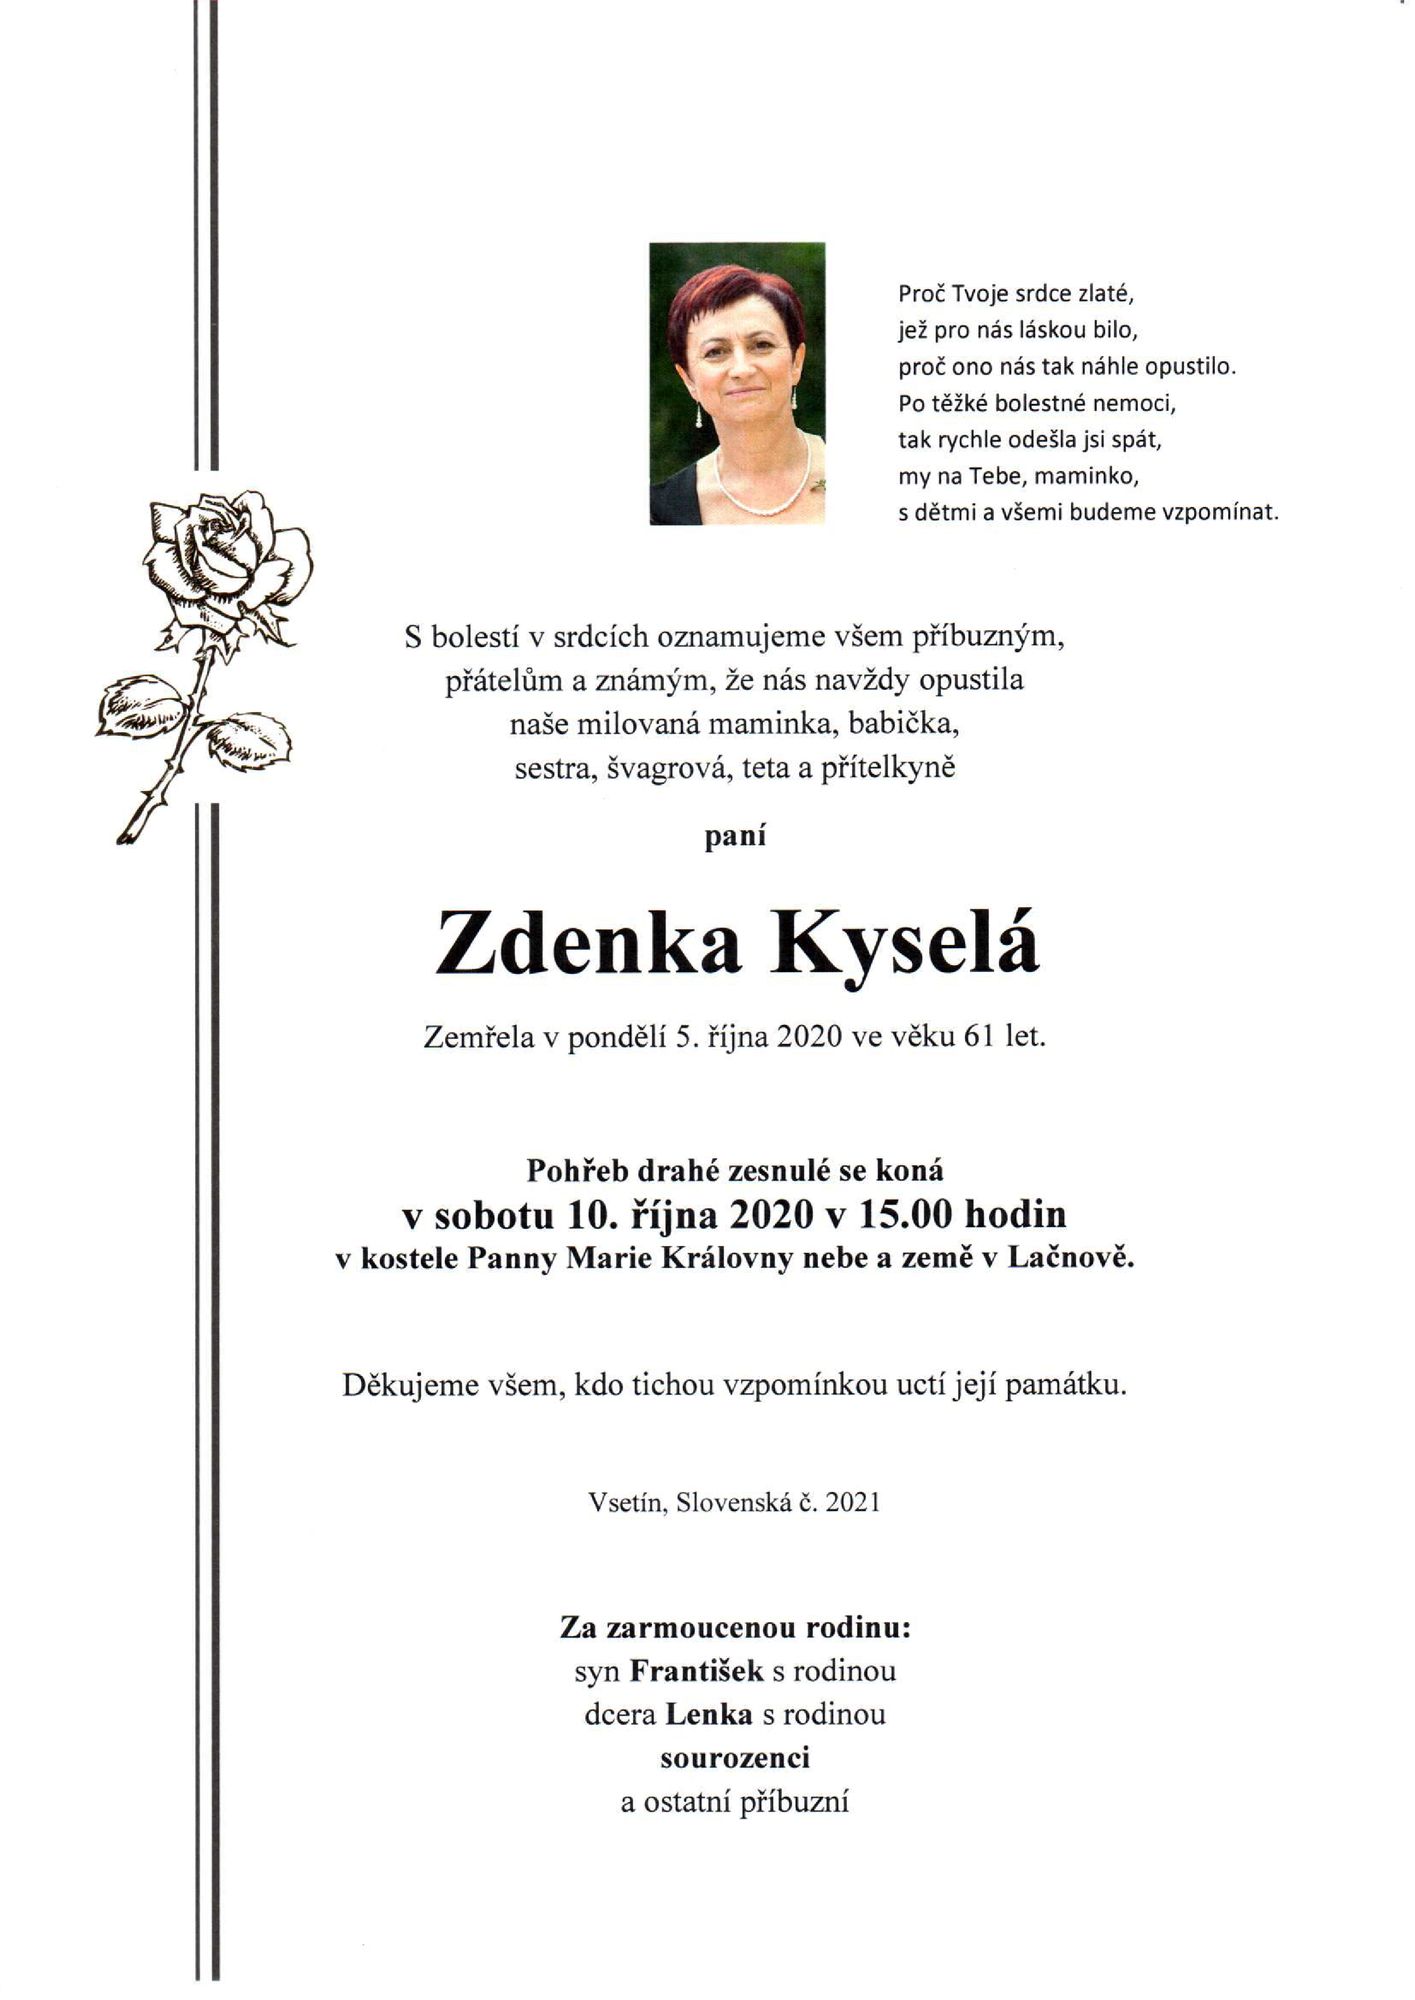 Zdenka Kyselá